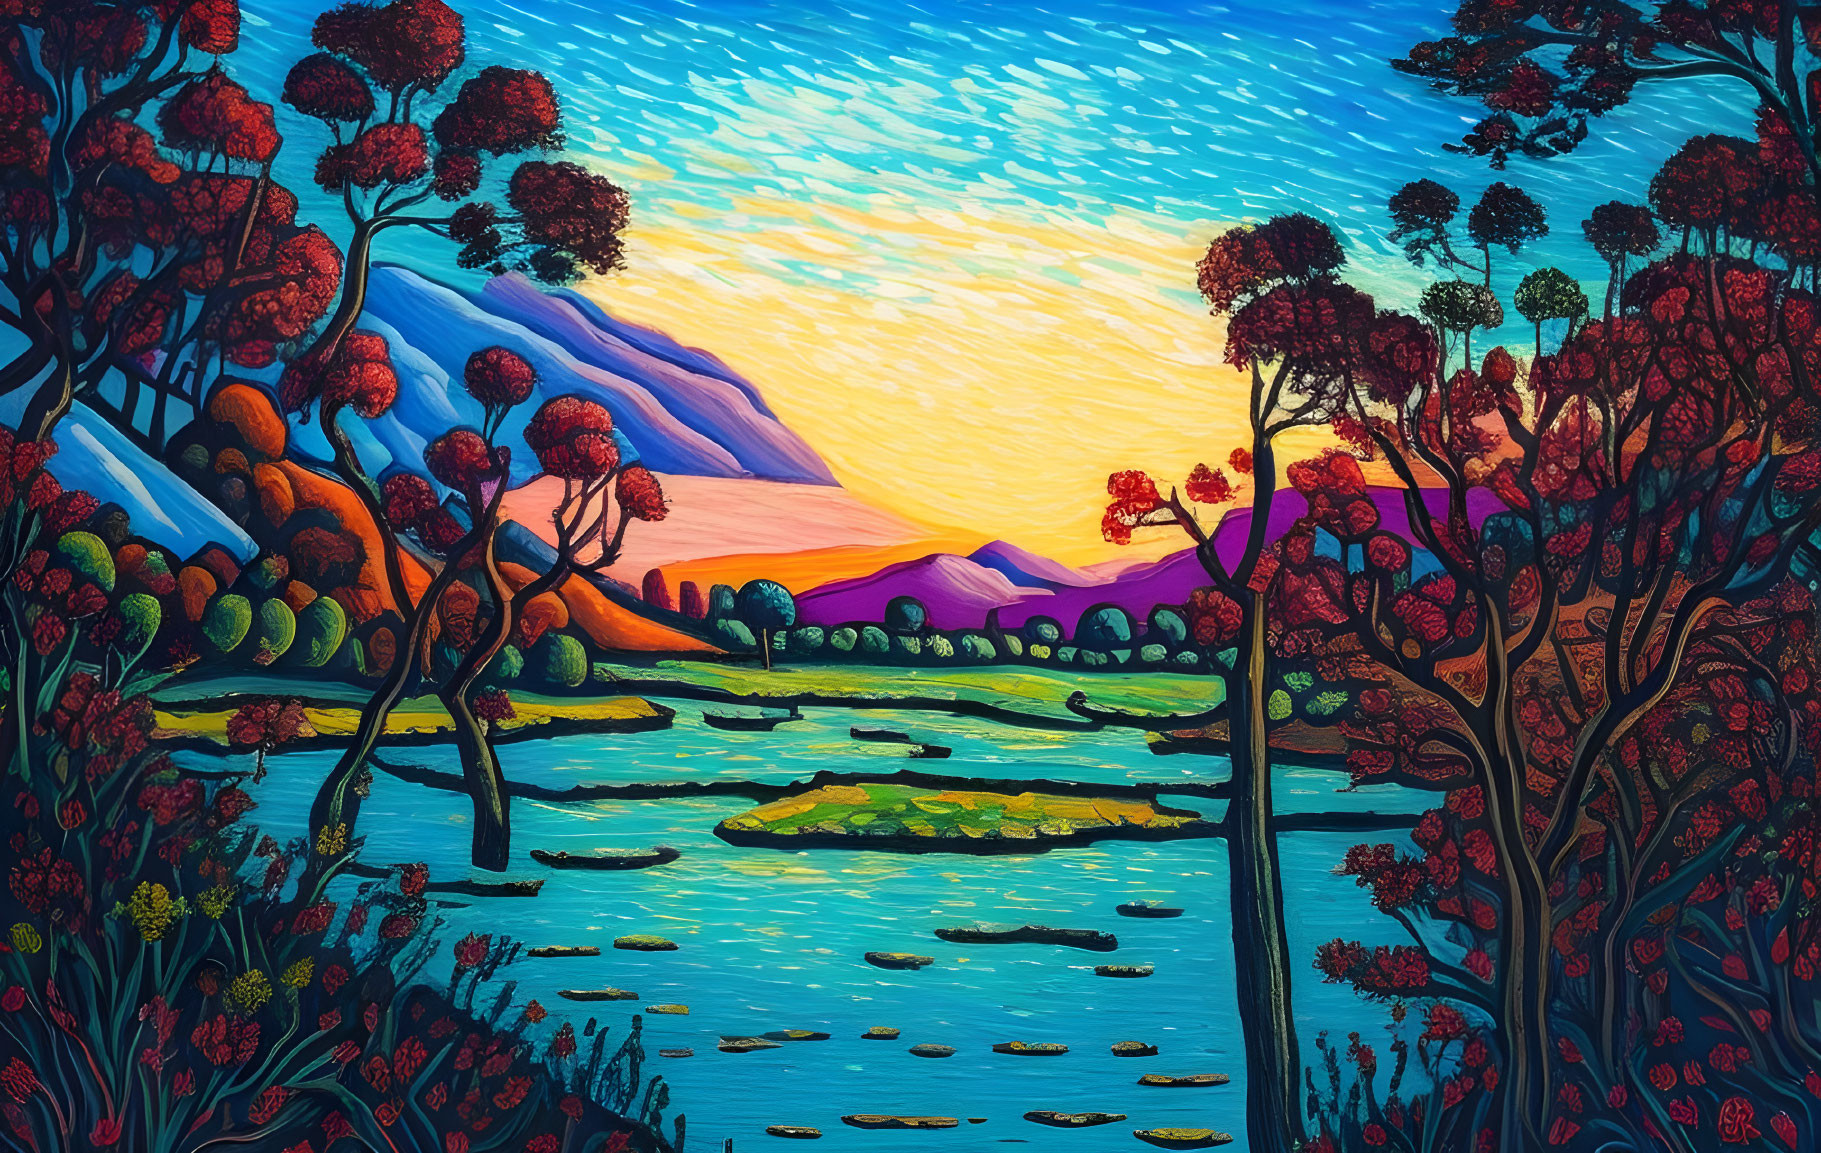 Colorful Landscape Painting: Stylized Trees, Serene Lake, and Sunset Sky